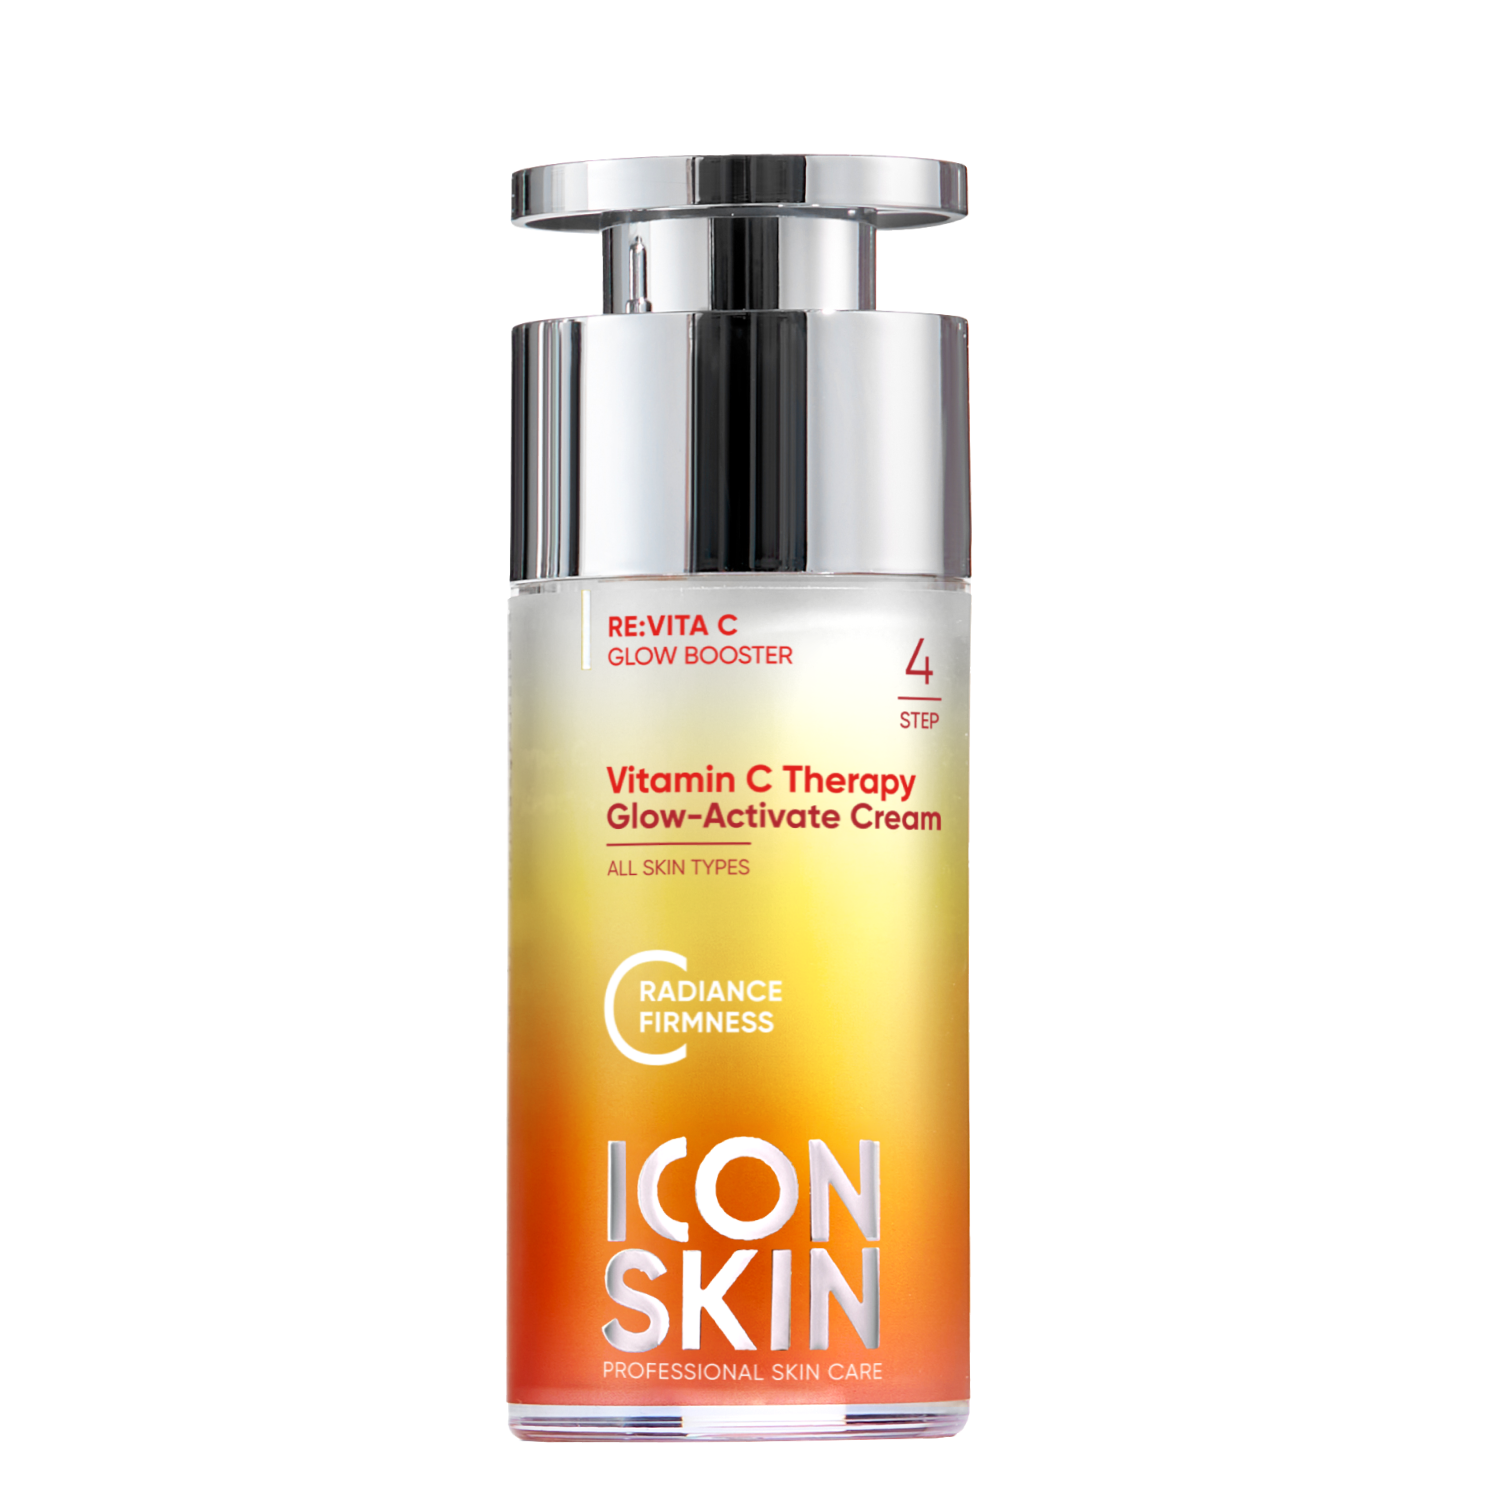 Icon Skin крем сияние для лица vitamin c therapy с витамином с и морским коллагеном увлажняющий для всех типов кожи 30 мл